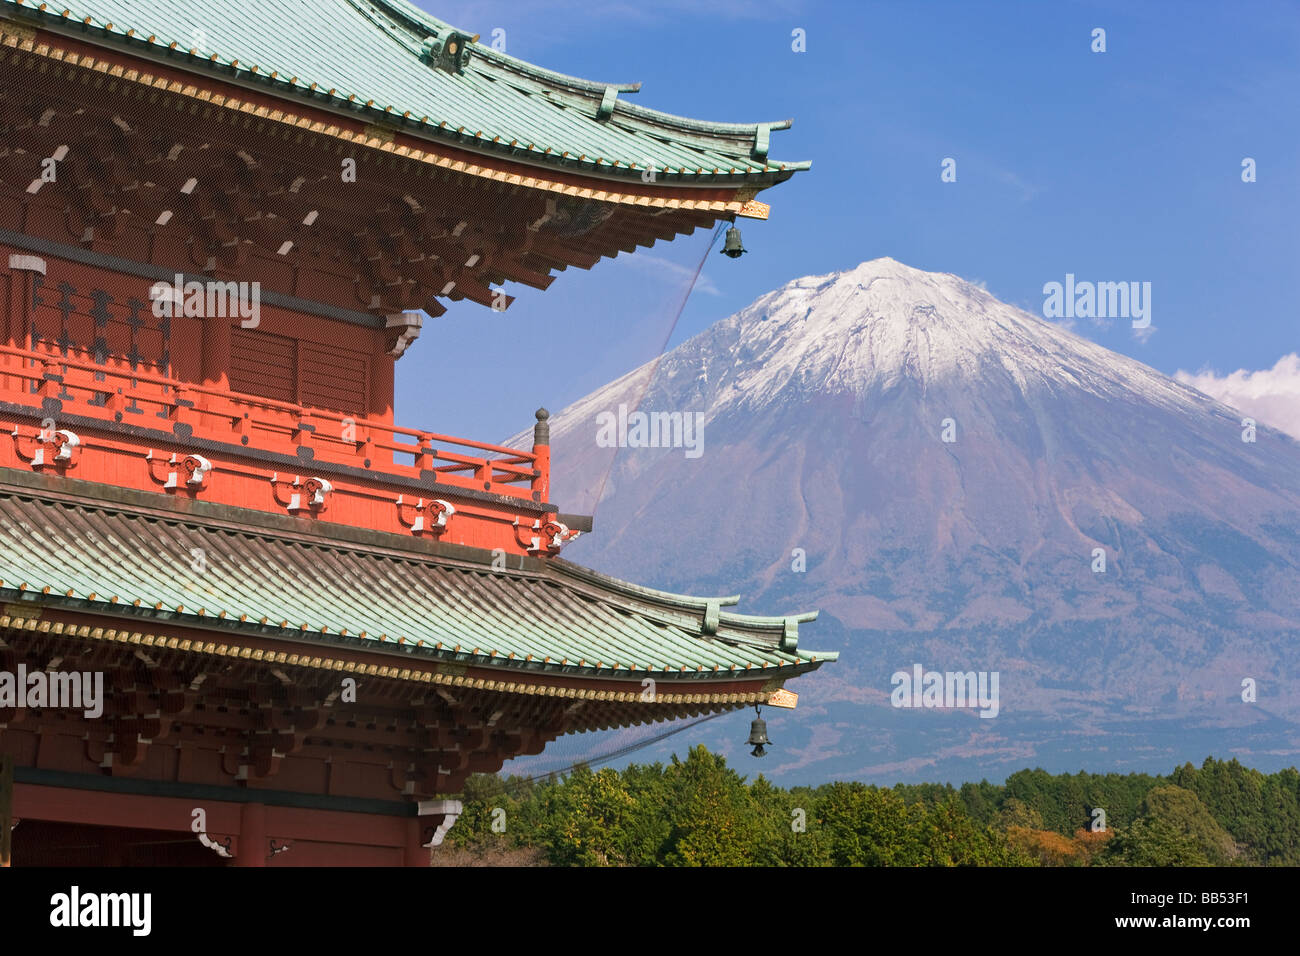 Japan Honshu Fuji Hakone Izu National Park Daiseki-ji Temple with Mount Fuji snowcapped in early autumn Stock Photo